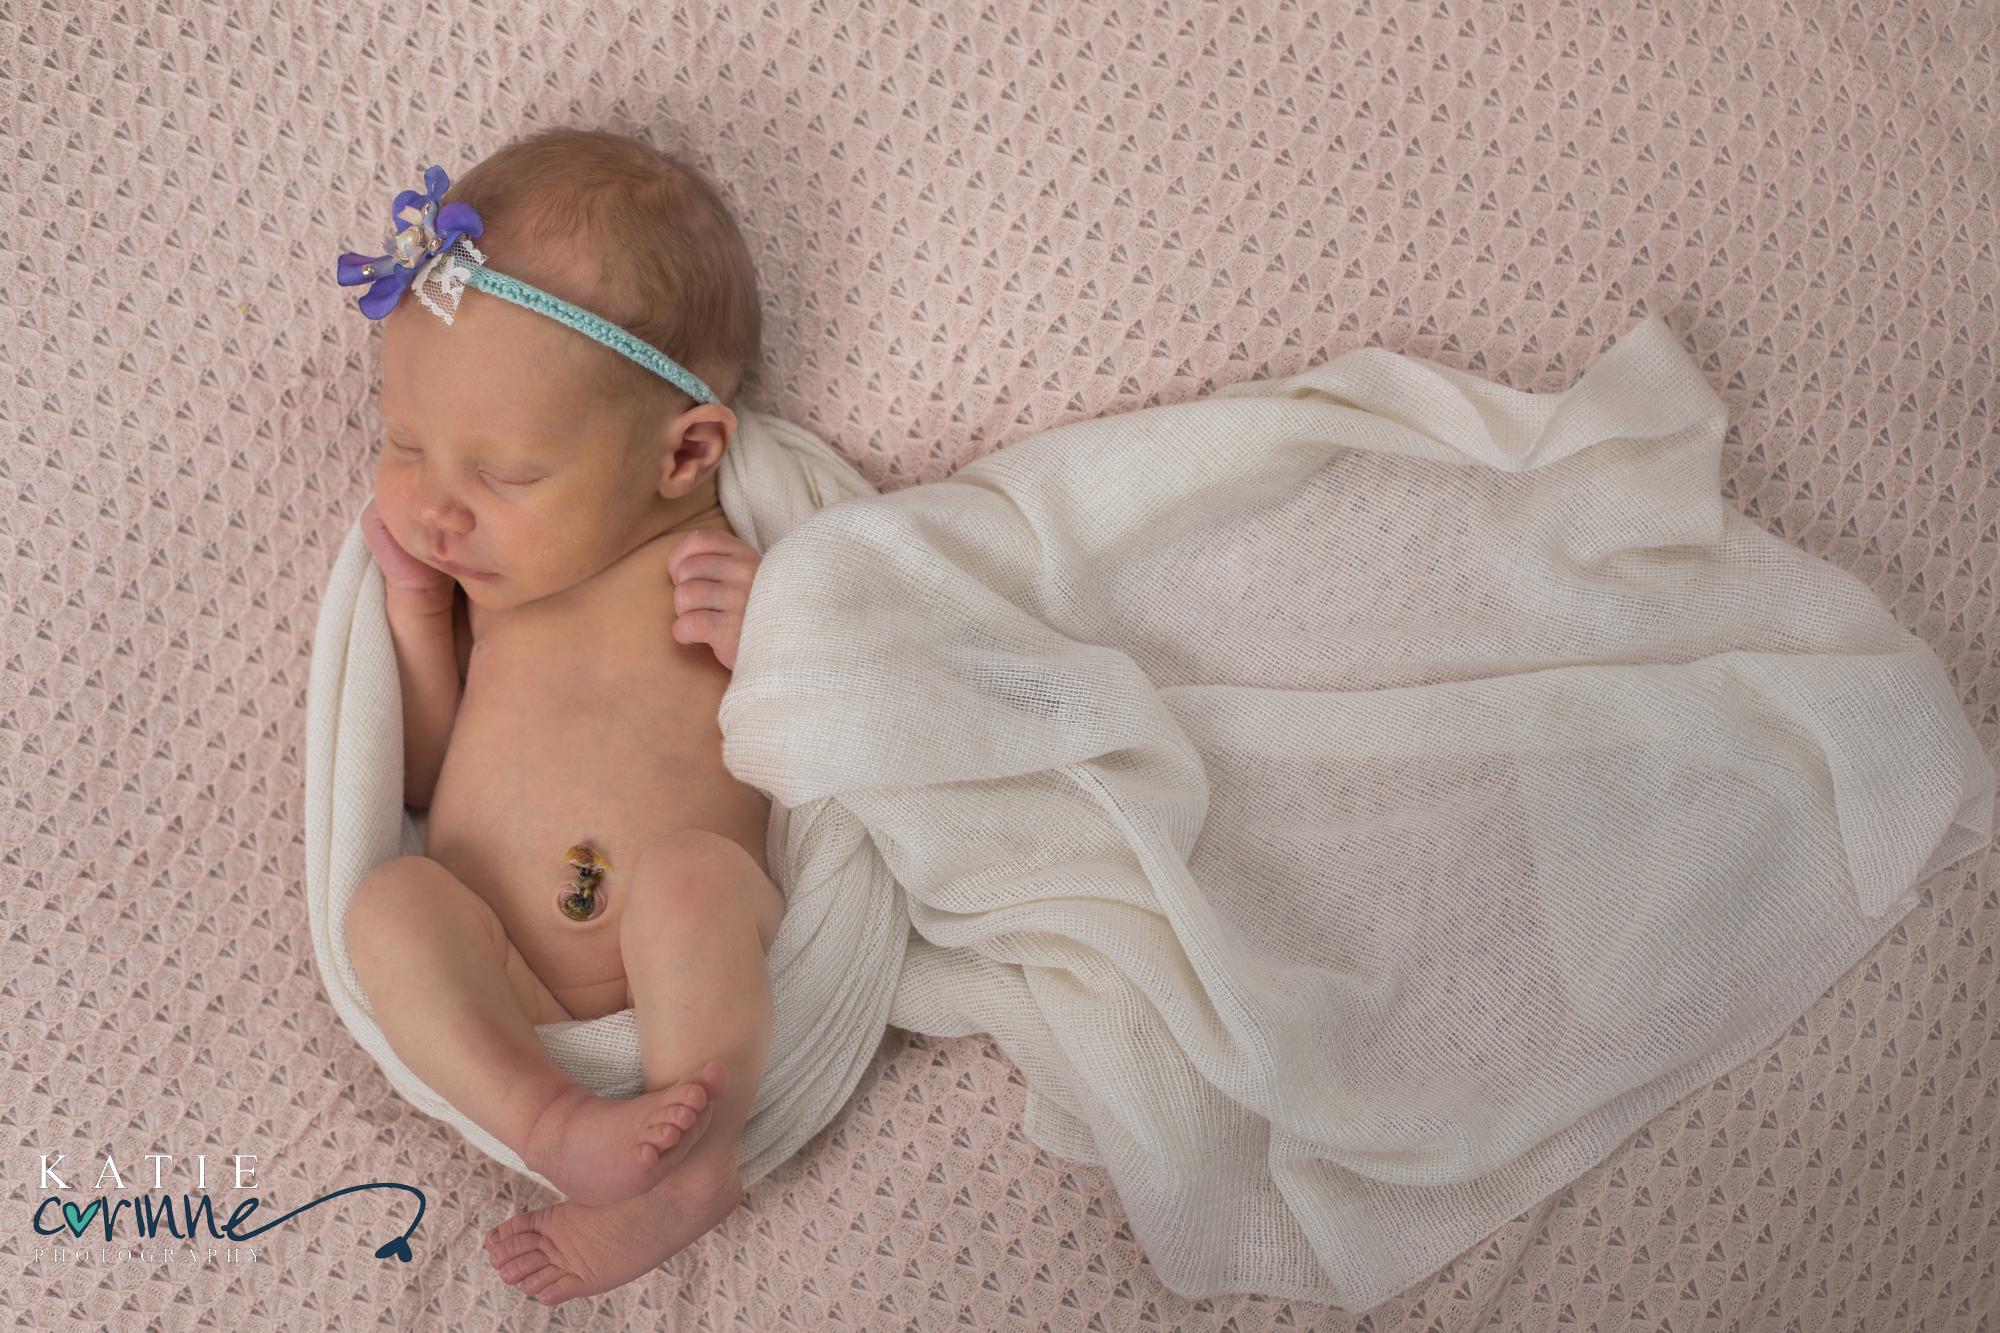 Colorado baby girl posed by newborn photographer